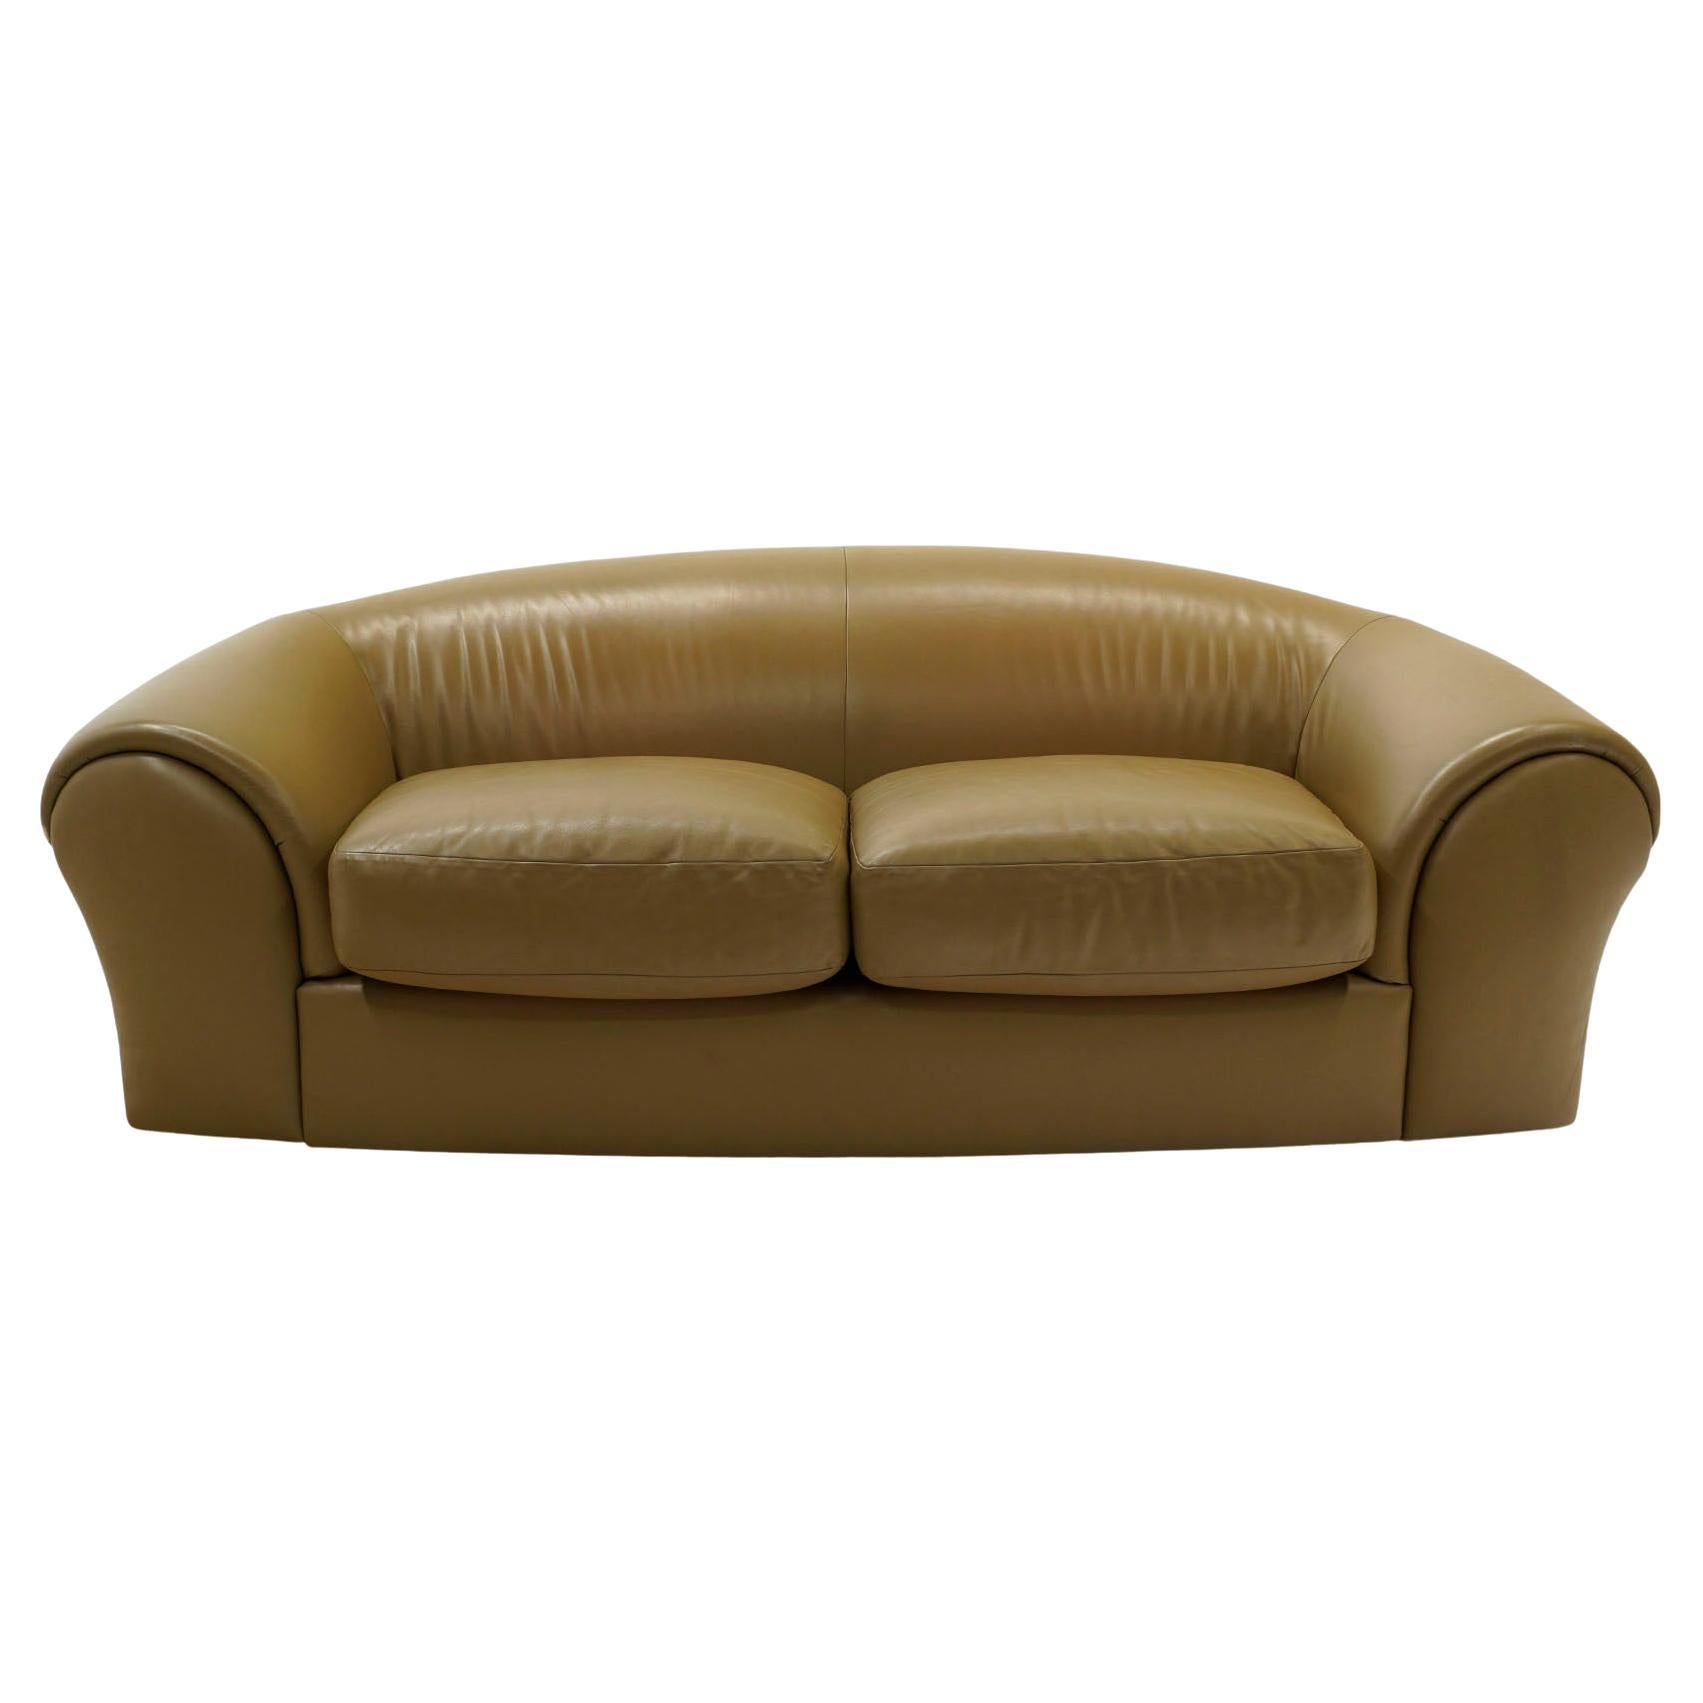 Robert Venturi Grandma Sofa in the Original Tan / Taupe Leather for Knoll. For Sale